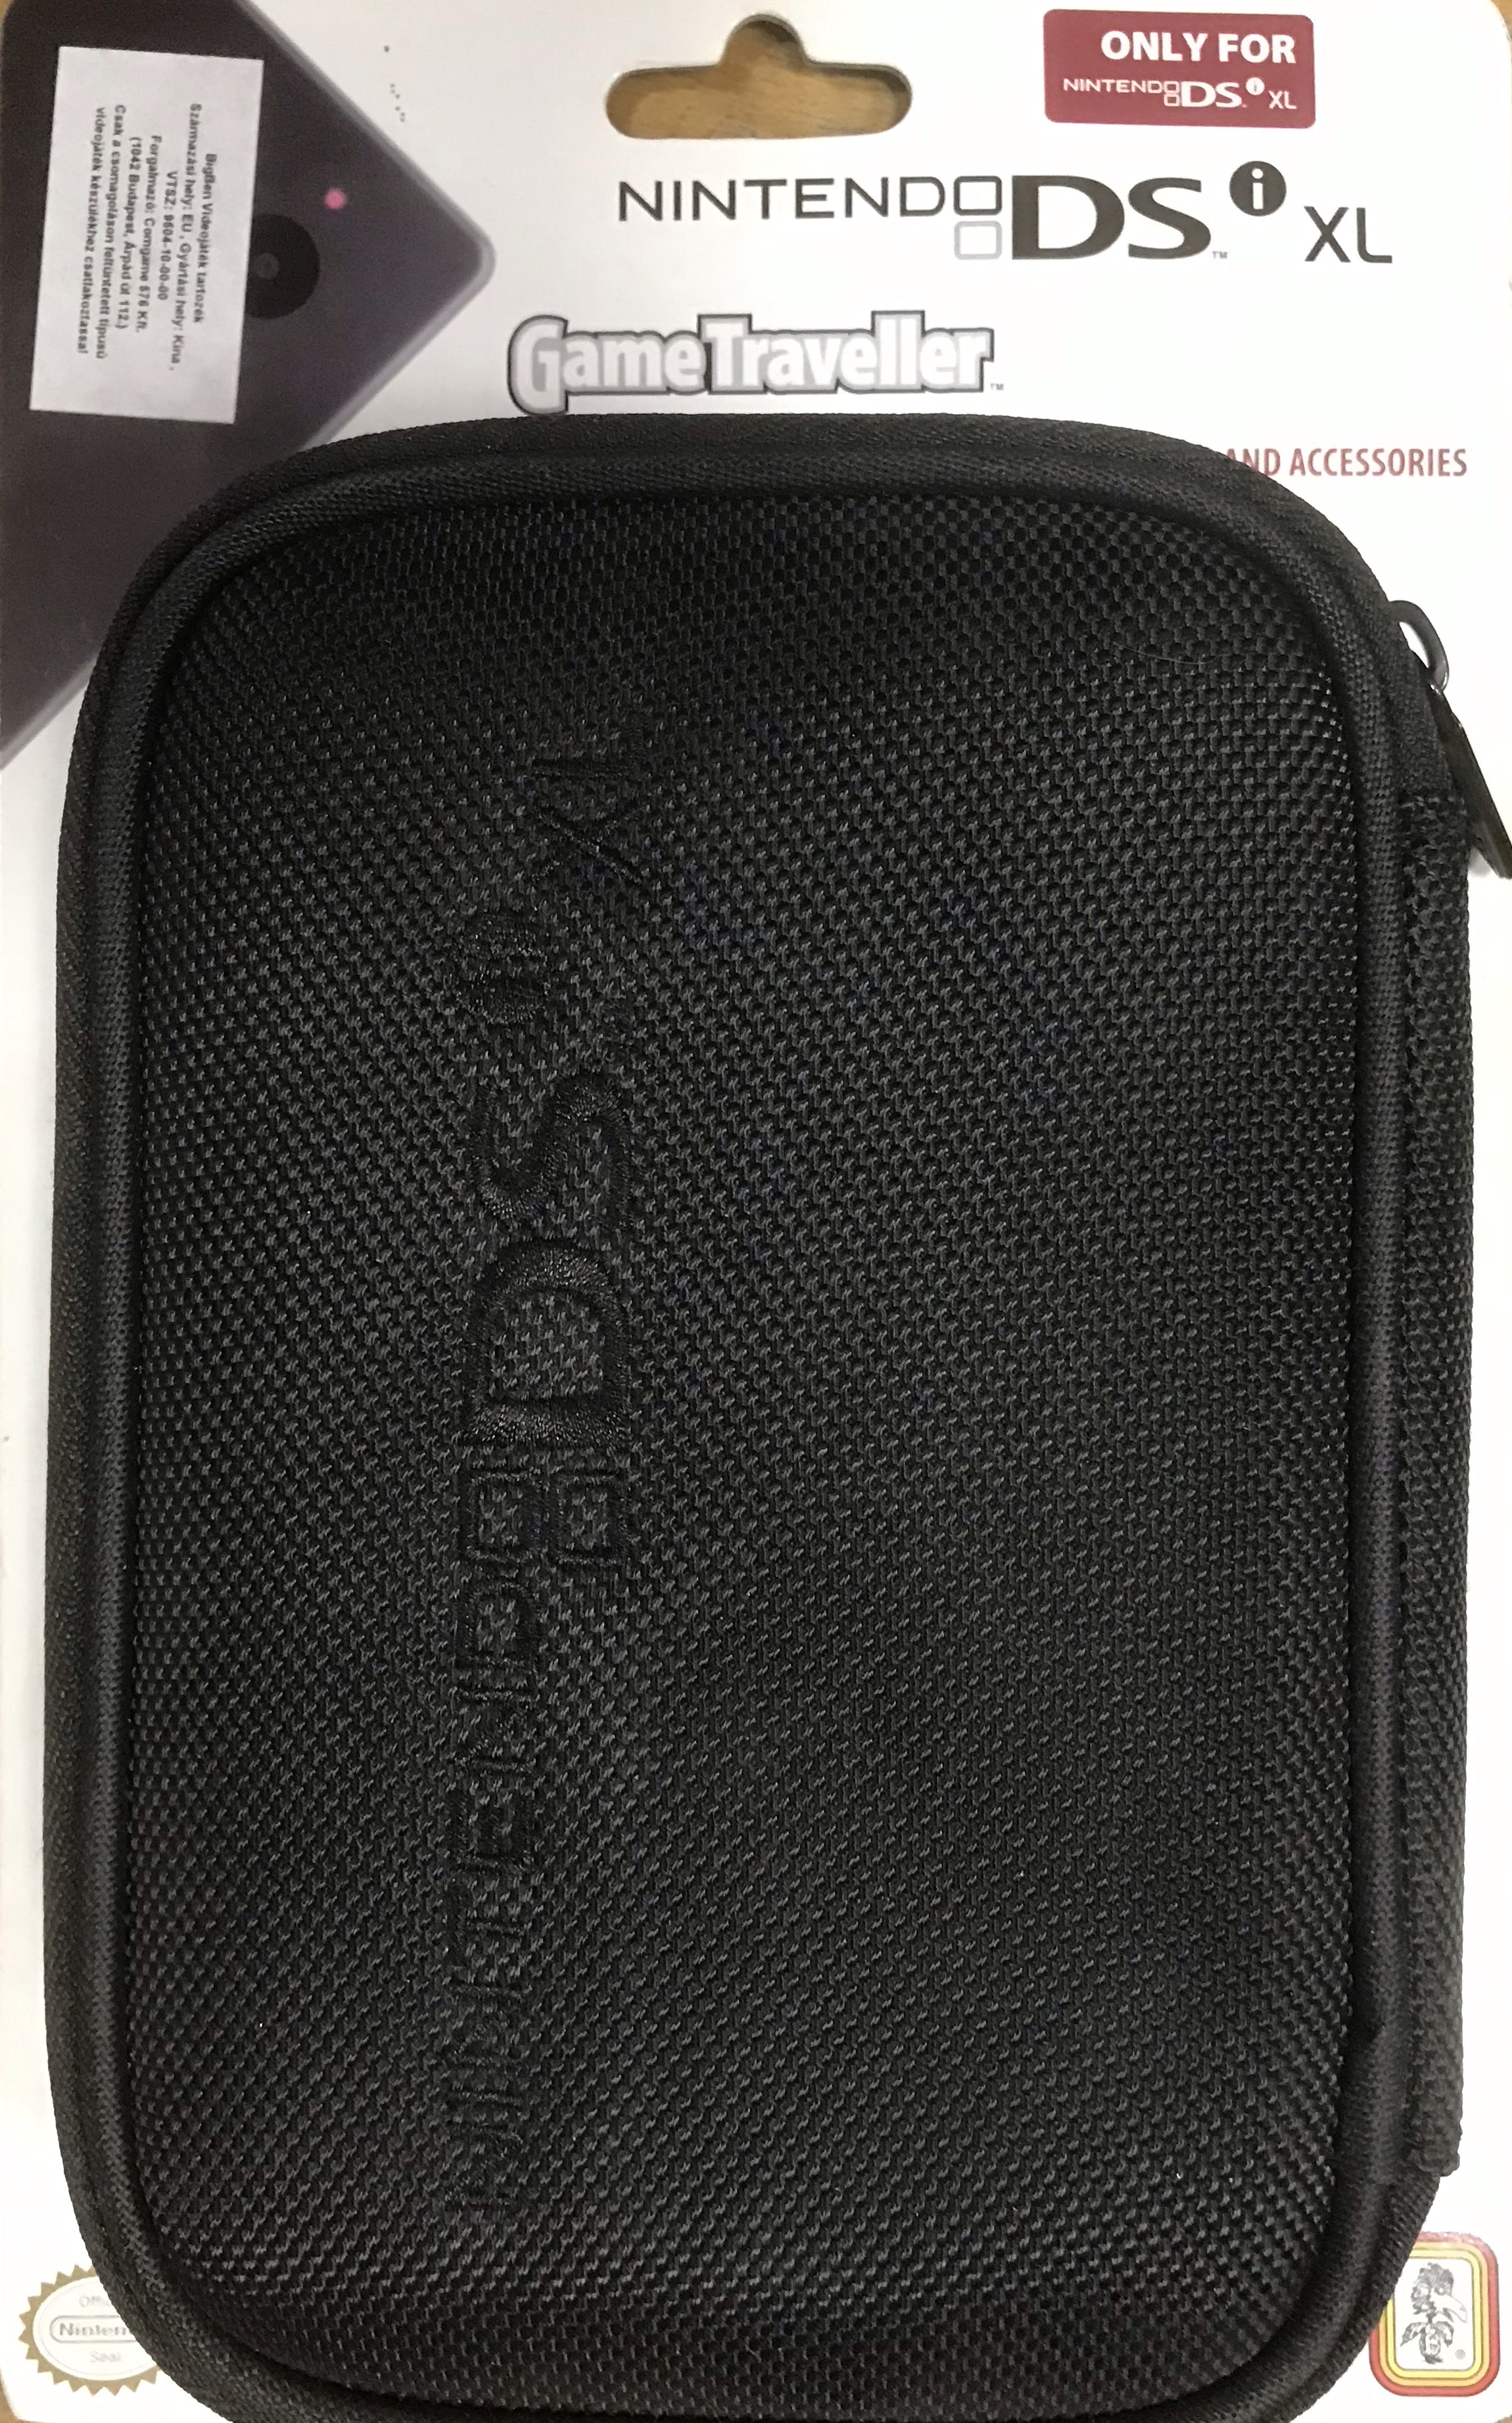 Nintendo DS XL Game Traveller (Fekete) - Nintendo DS Kiegészítők